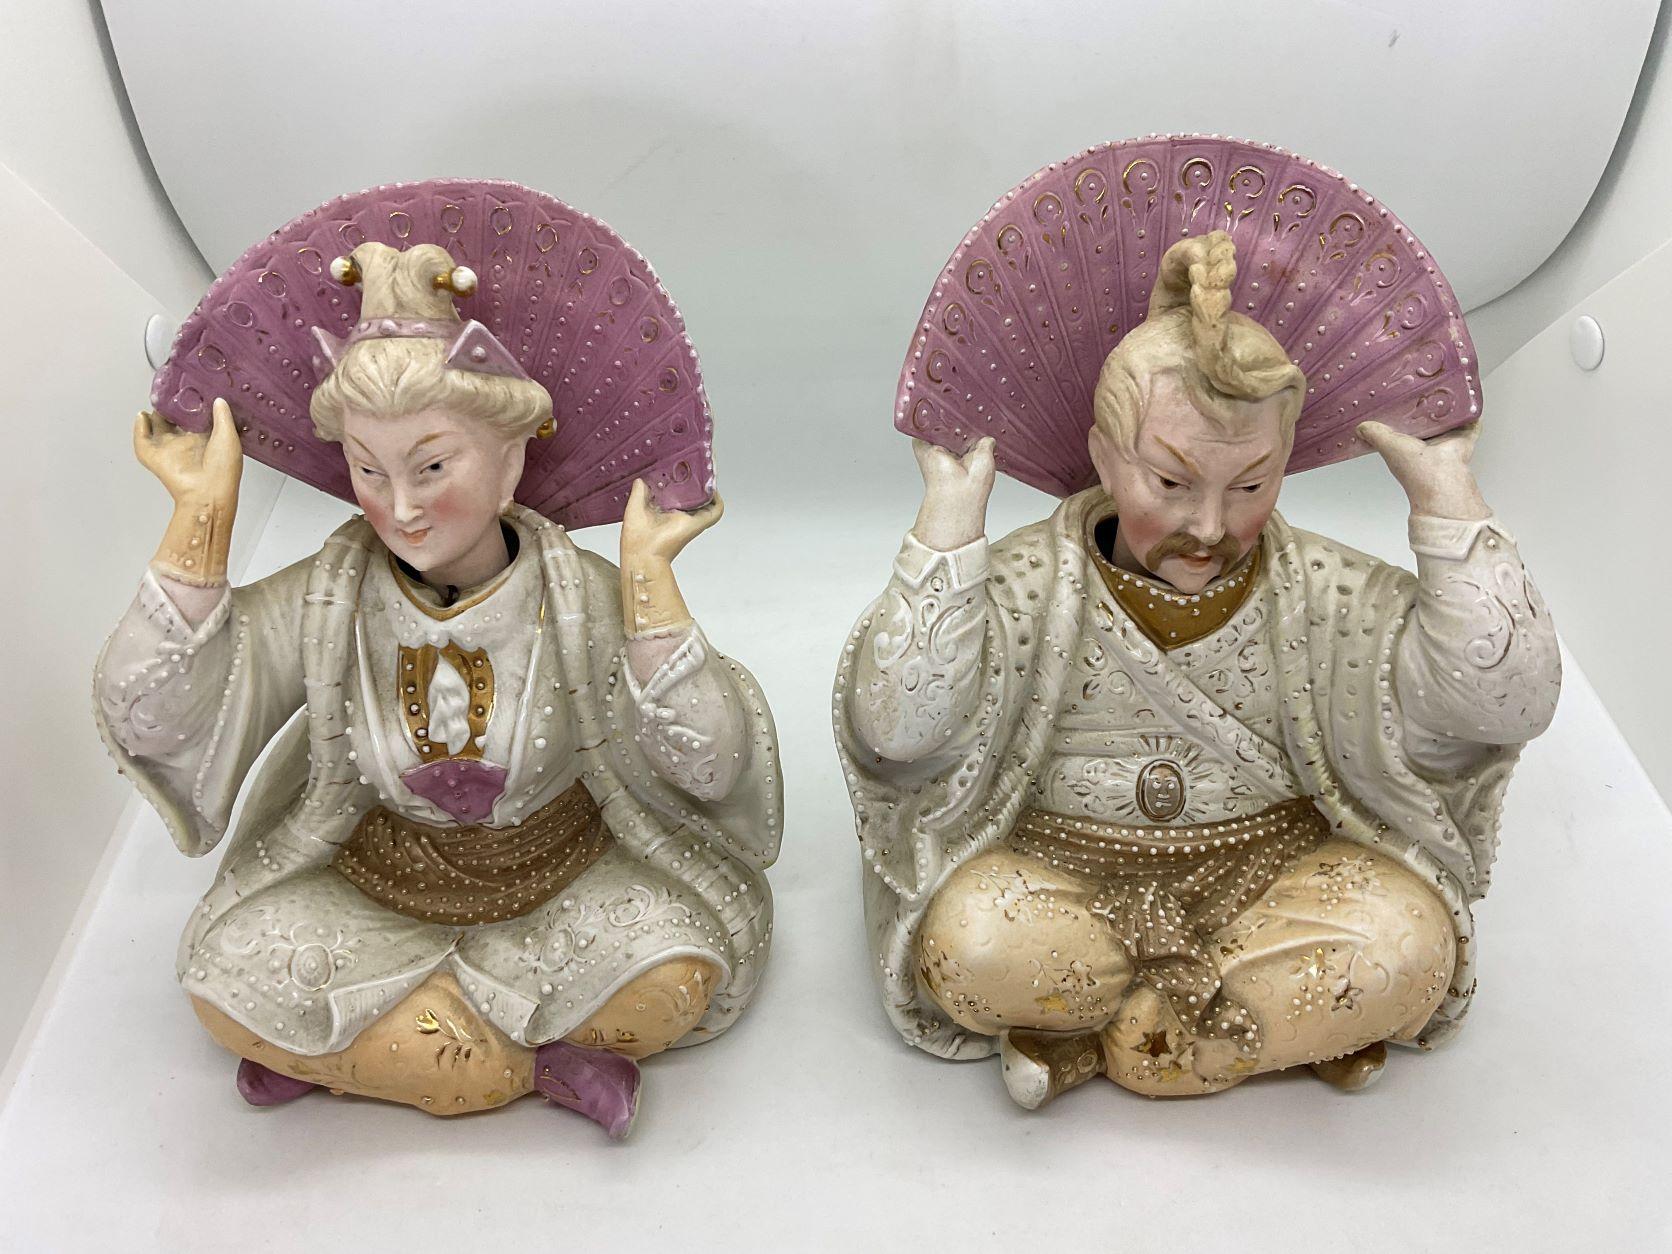 Pair of Asian Nodder Figurines, Emporer and Empress